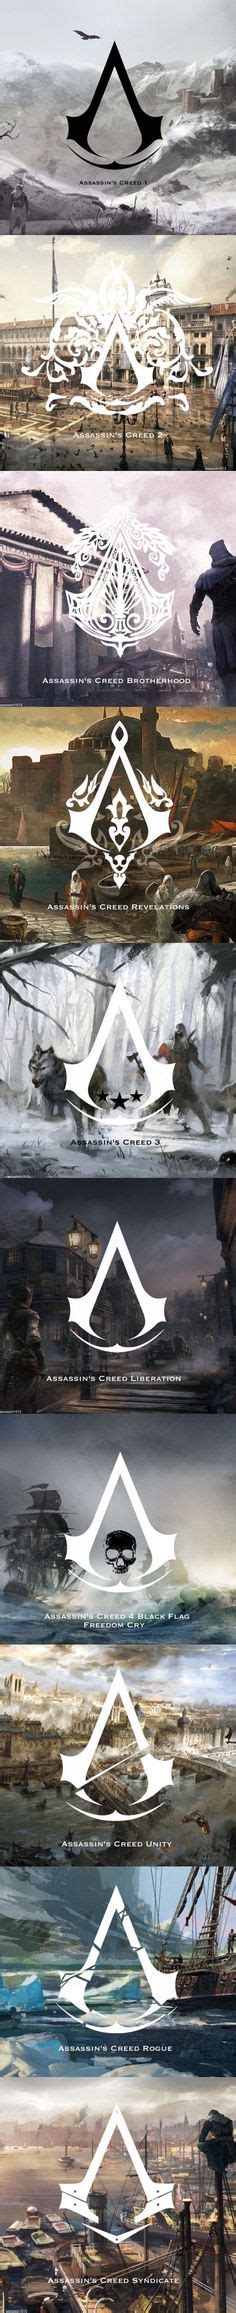 250 Assassin S Creed Ideen Connor Kenway Assassine Assassins Creed